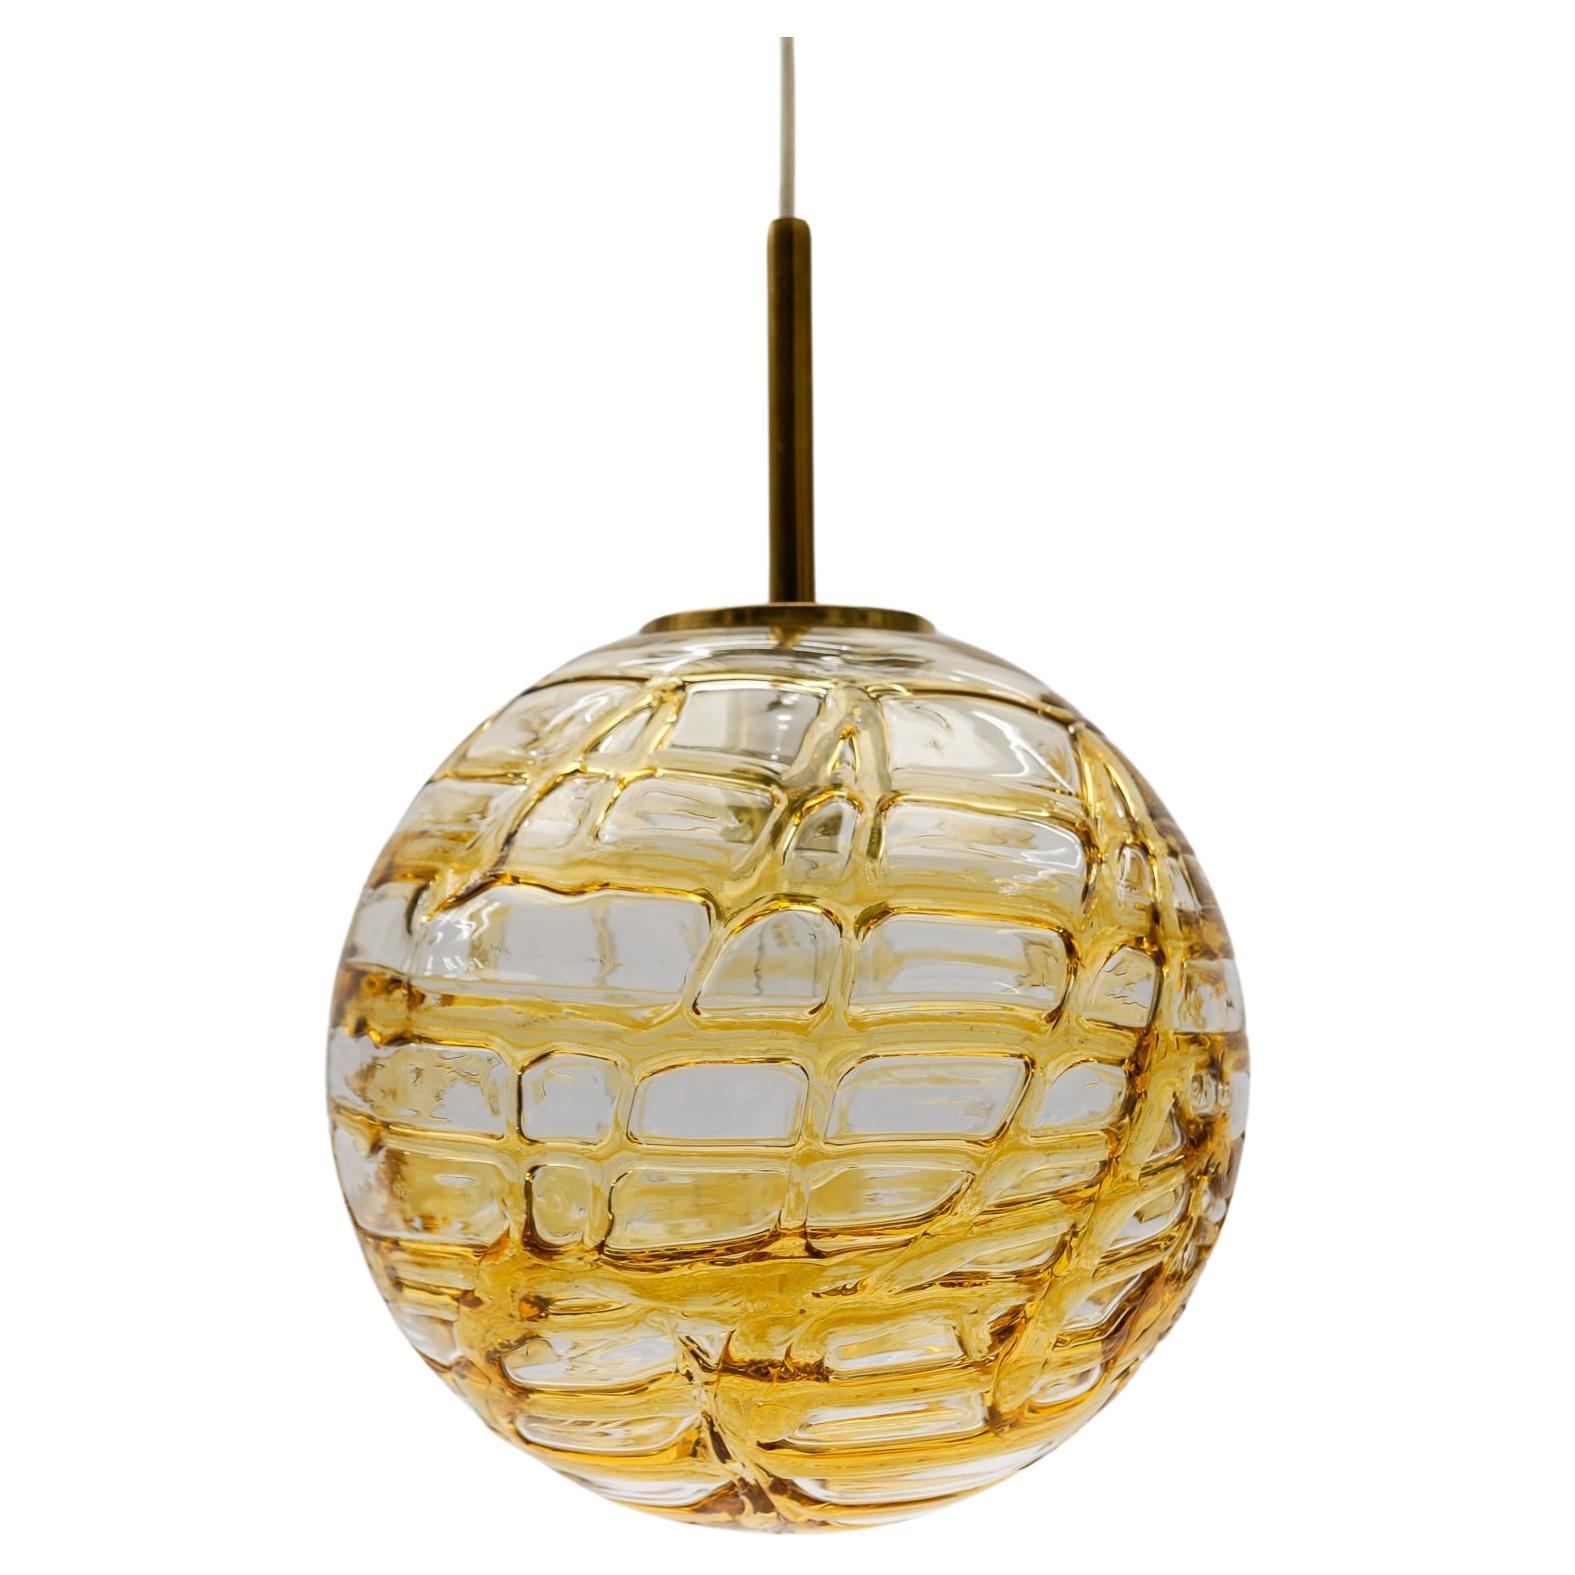 Lovely Yellow Murano Glass Ball Pendant Lamp by Doria, - 1960s Germany